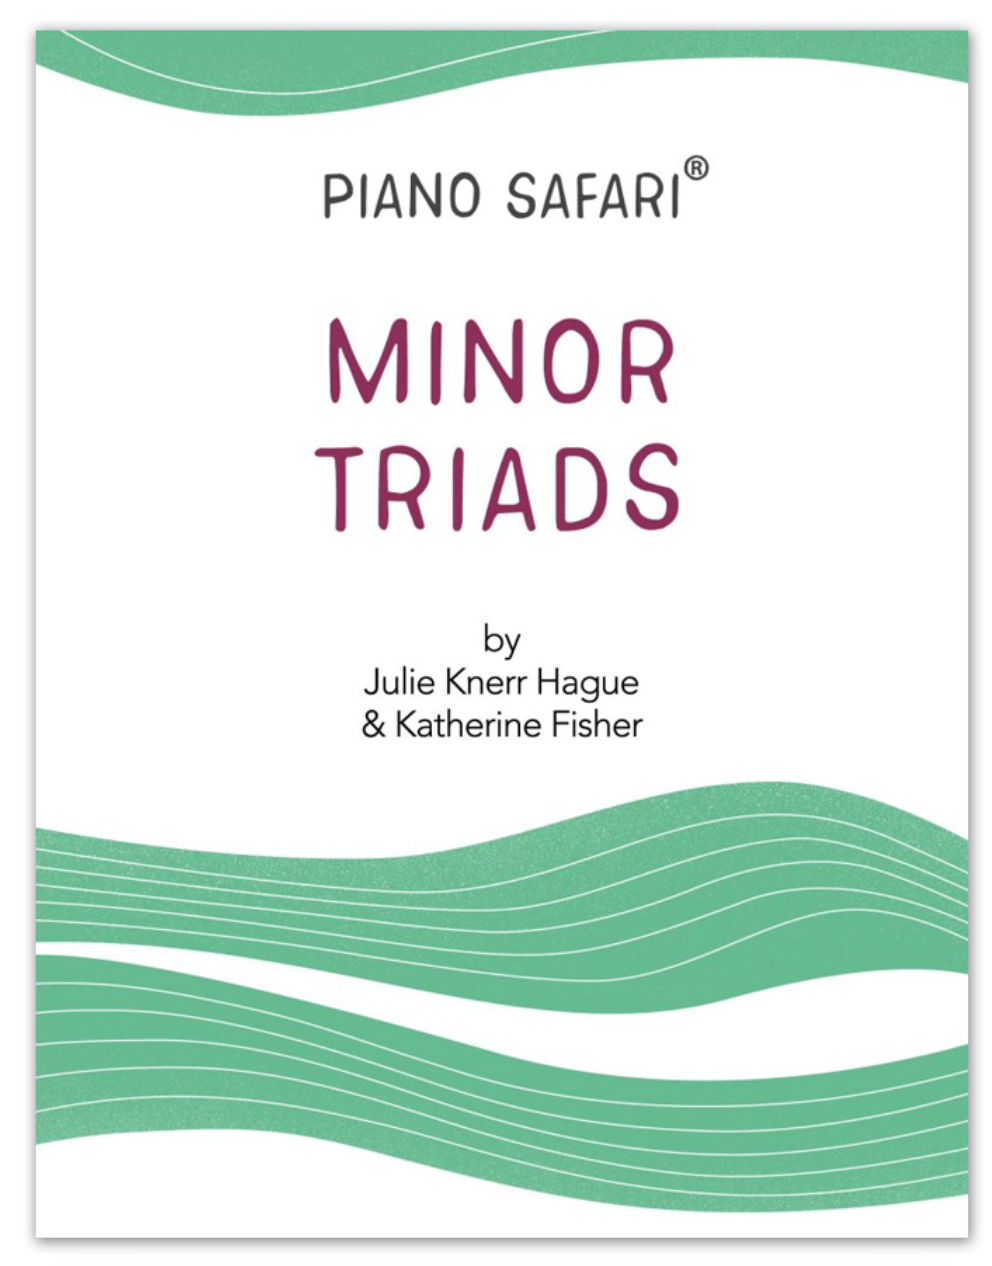 Piano Safari Minor Triads Cards - Fisher Katherine; Hague Julie Knerr Piano Safari PNSF1046